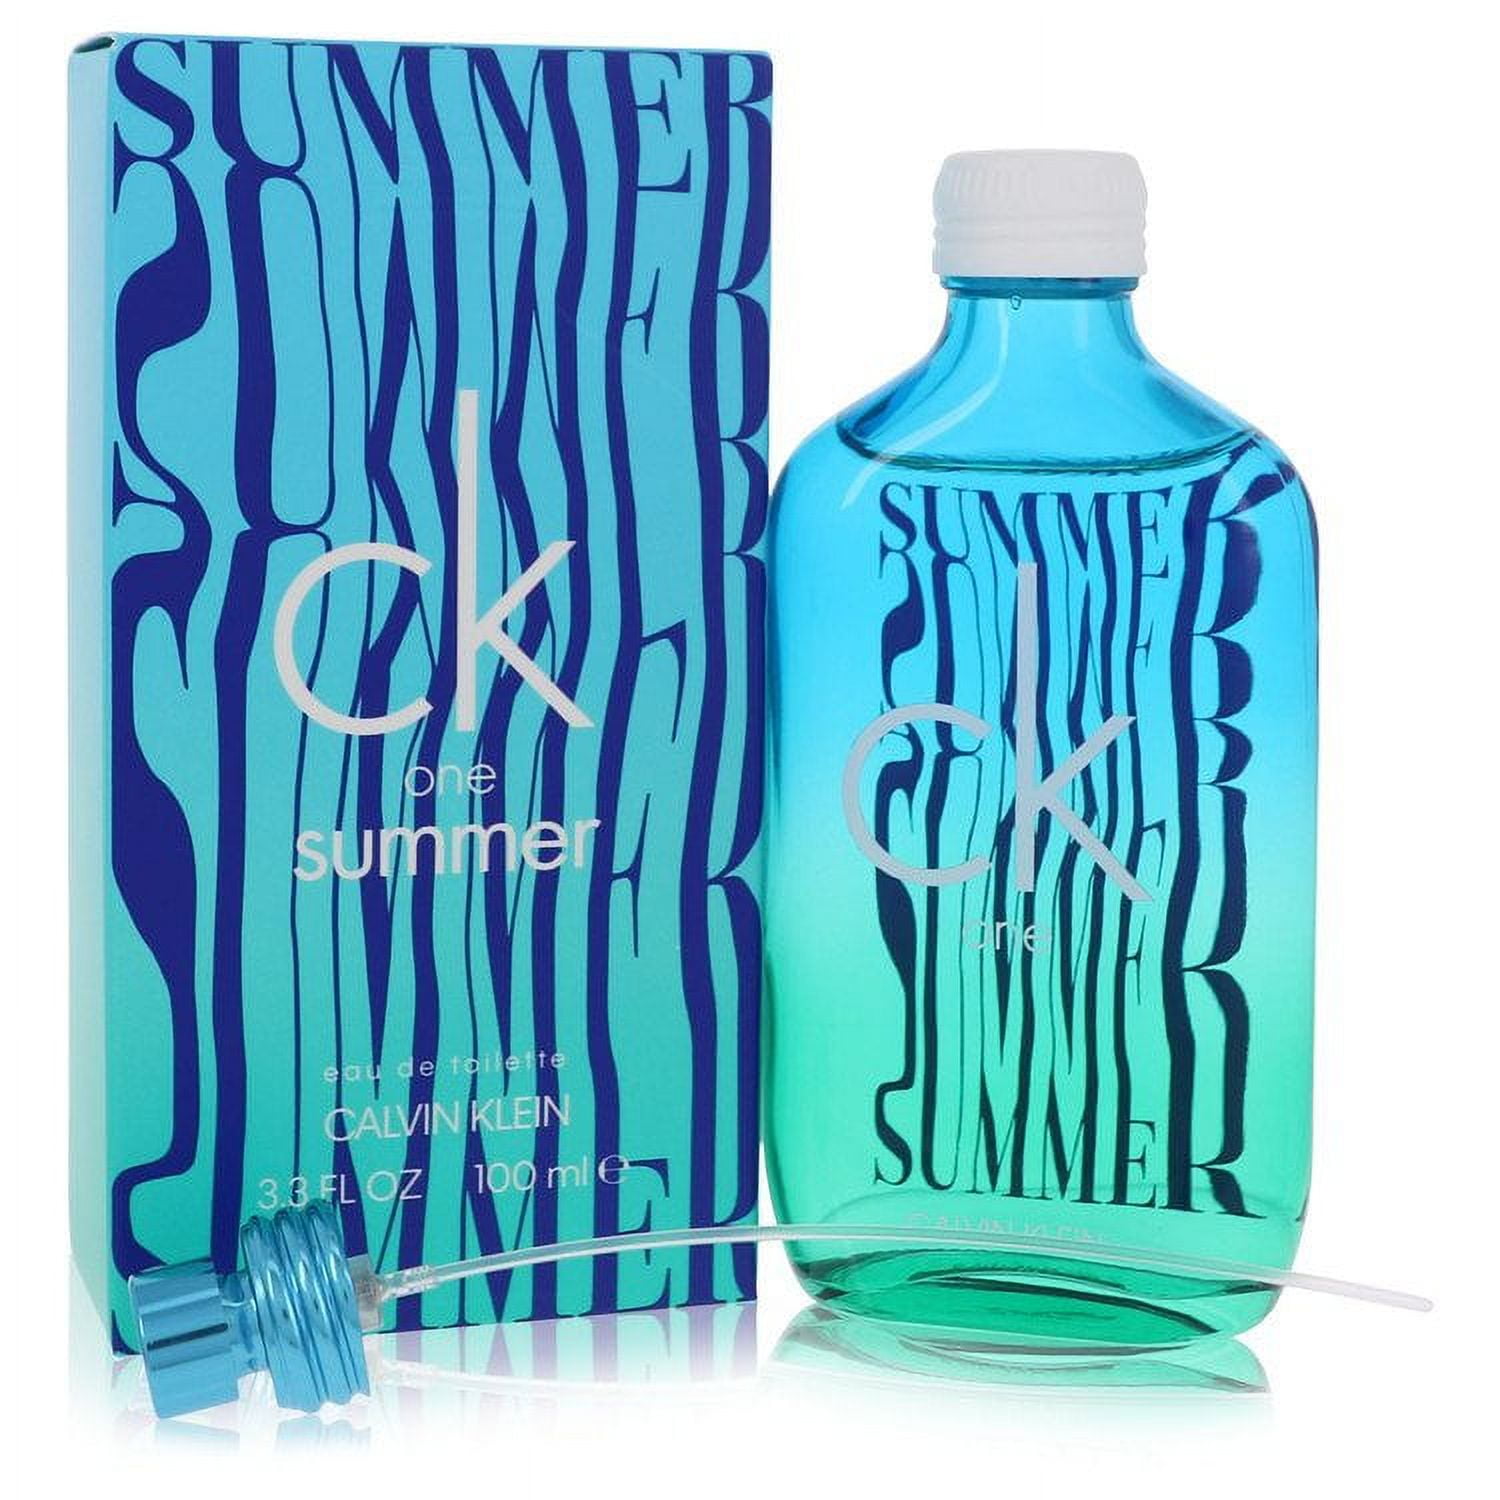 Calvin Klein CK One Summer 2018 Eau de Toilette Spray for Unisex